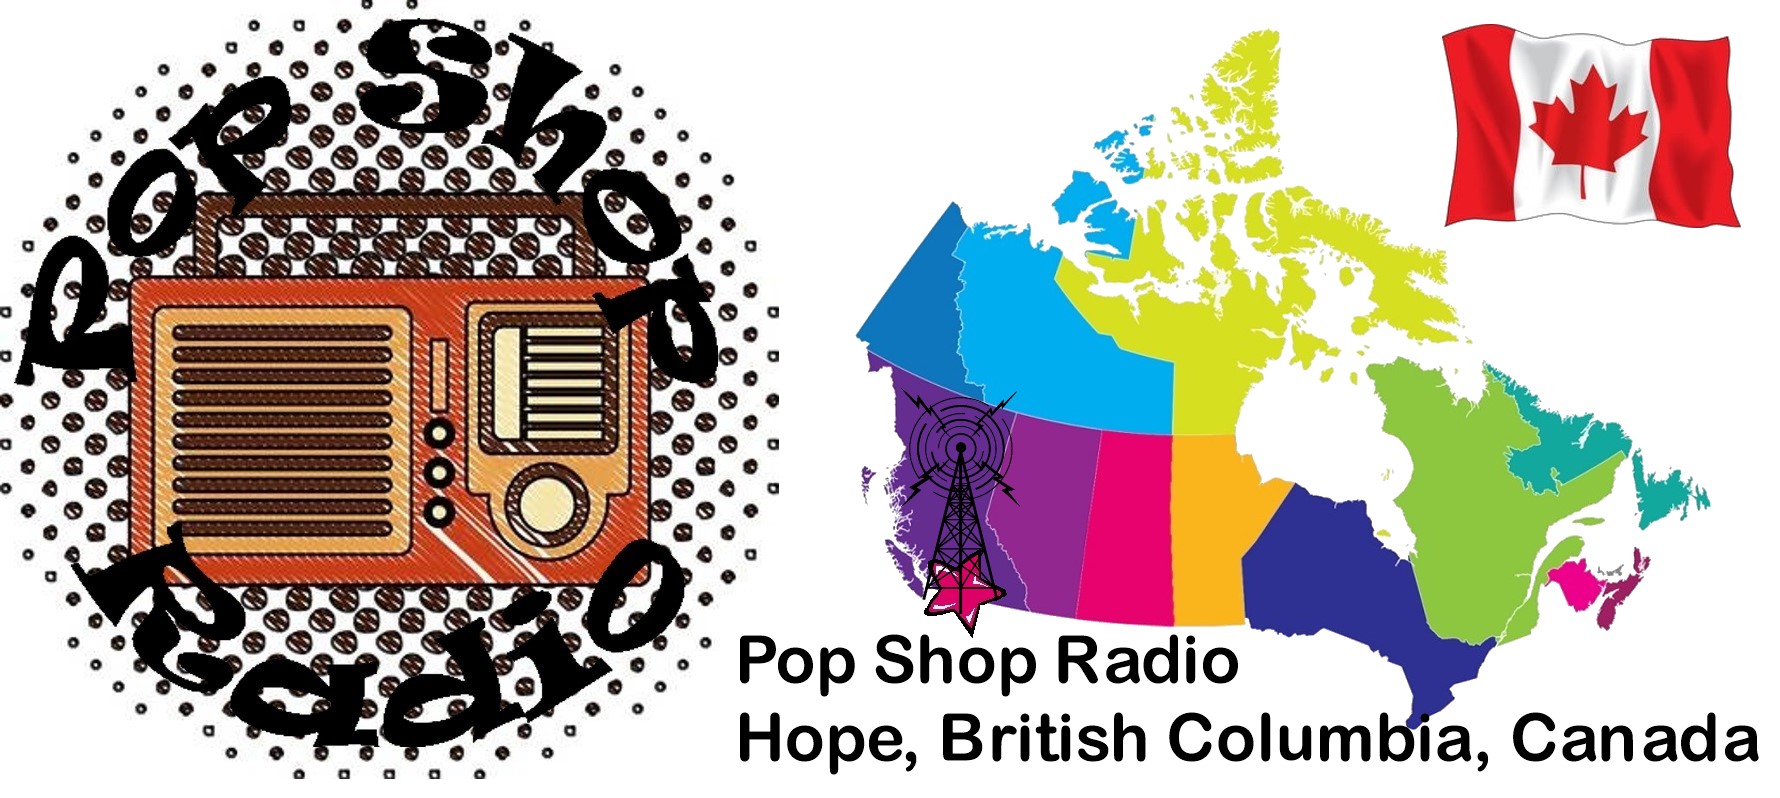 Pop Shop Radio salutes Finland